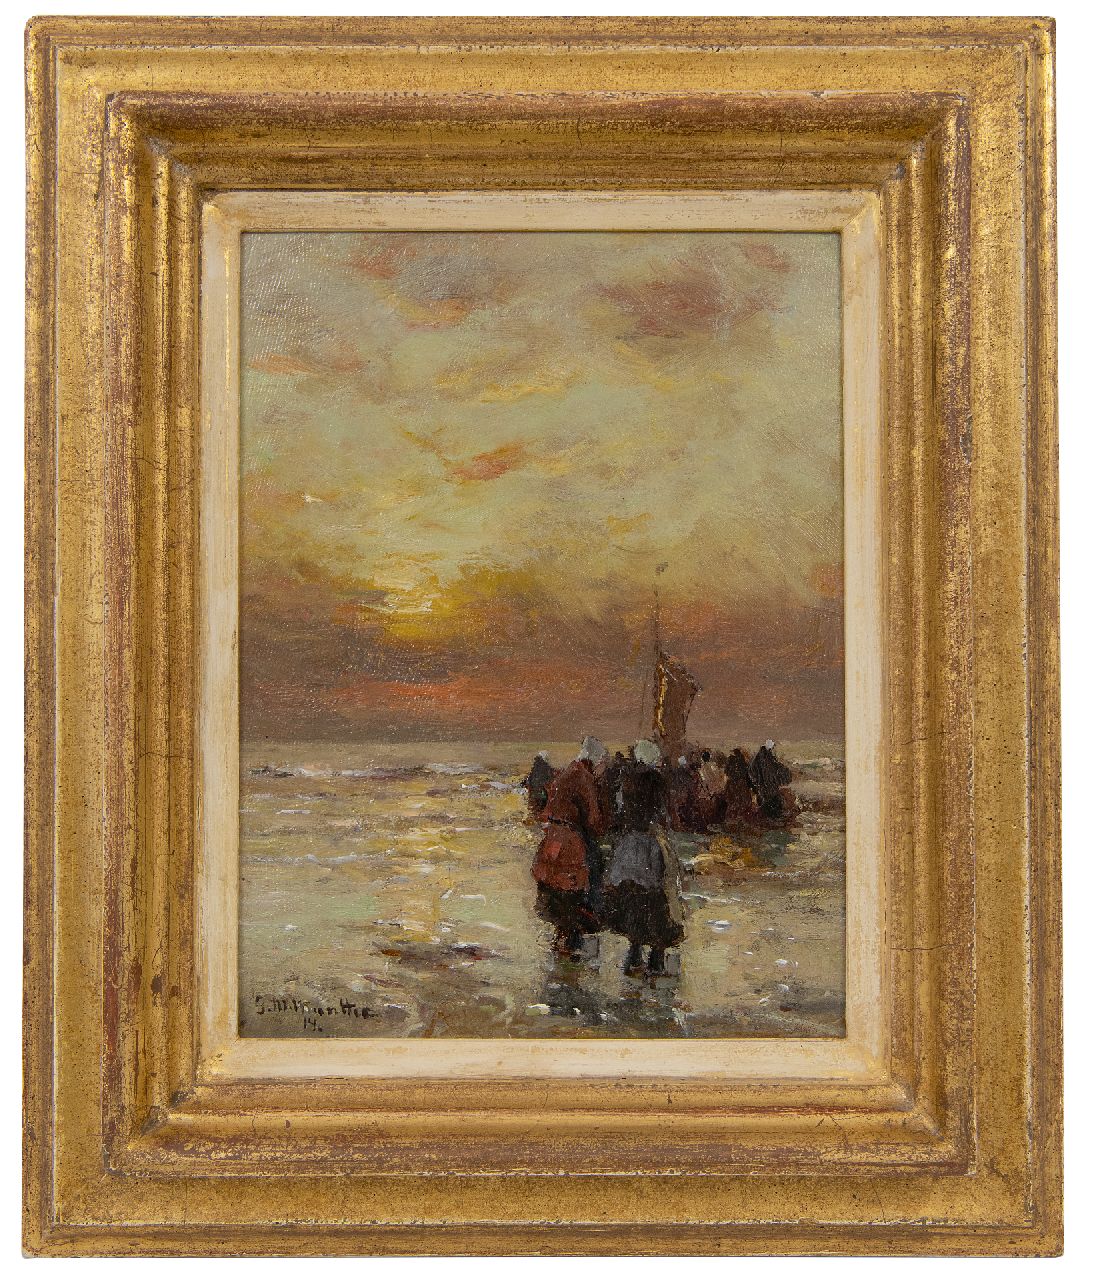 Munthe G.A.L.  | Gerhard Arij Ludwig 'Morgenstjerne' Munthe, Fisherwomen in the surf at sunset, oil on panel 21.1 x 15.9 cm, signed l.l. and dated '14